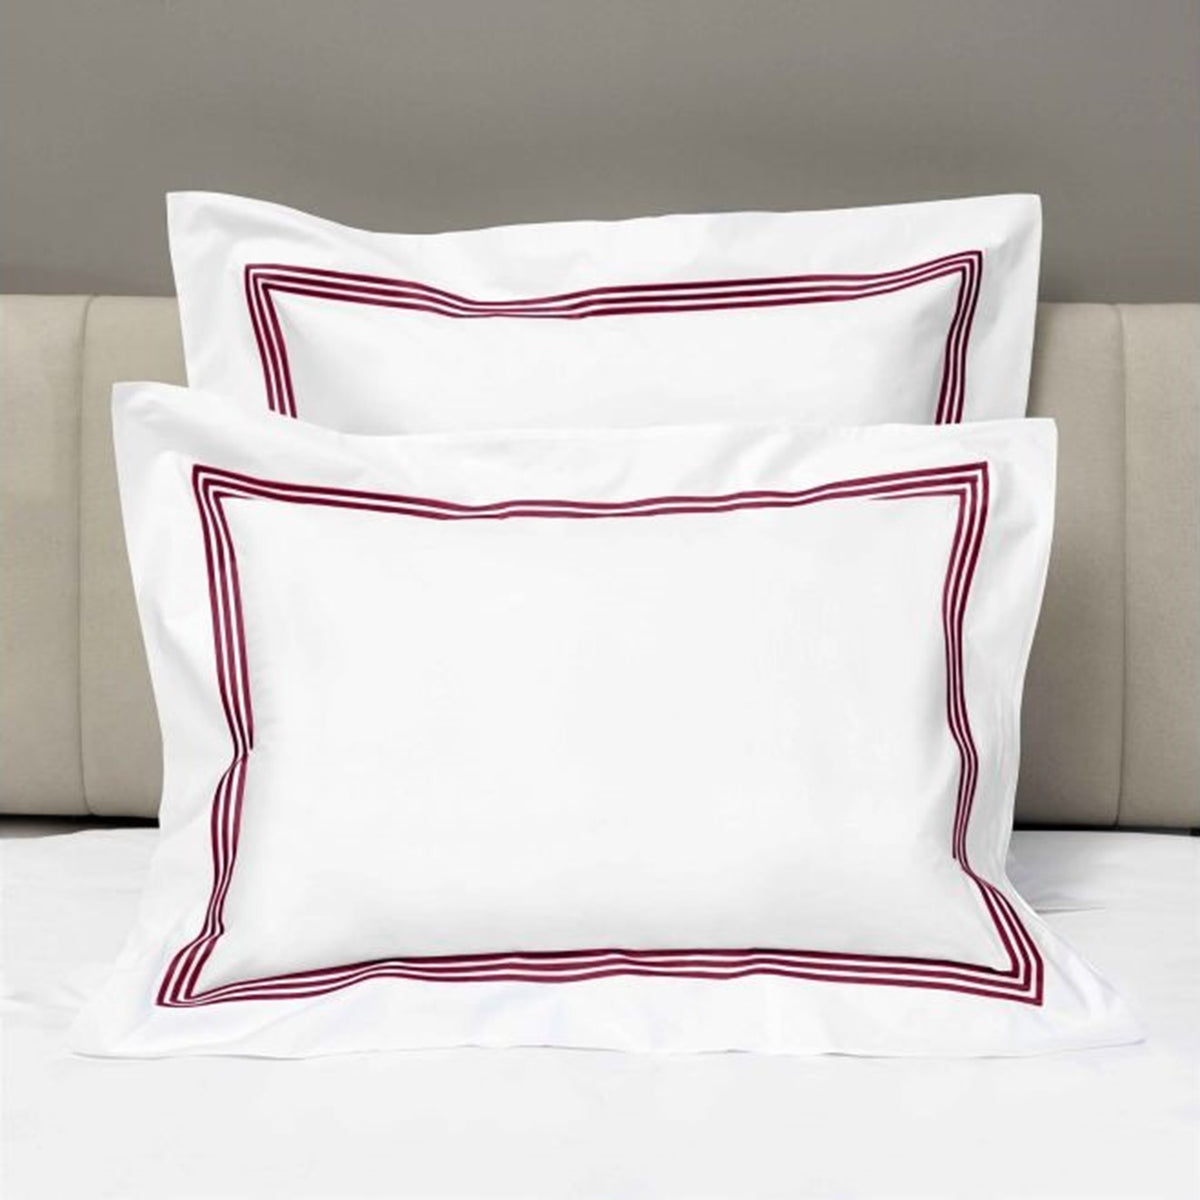 Shams of Signoria Platinum Percale Bedding in White/Cardinale Red Color